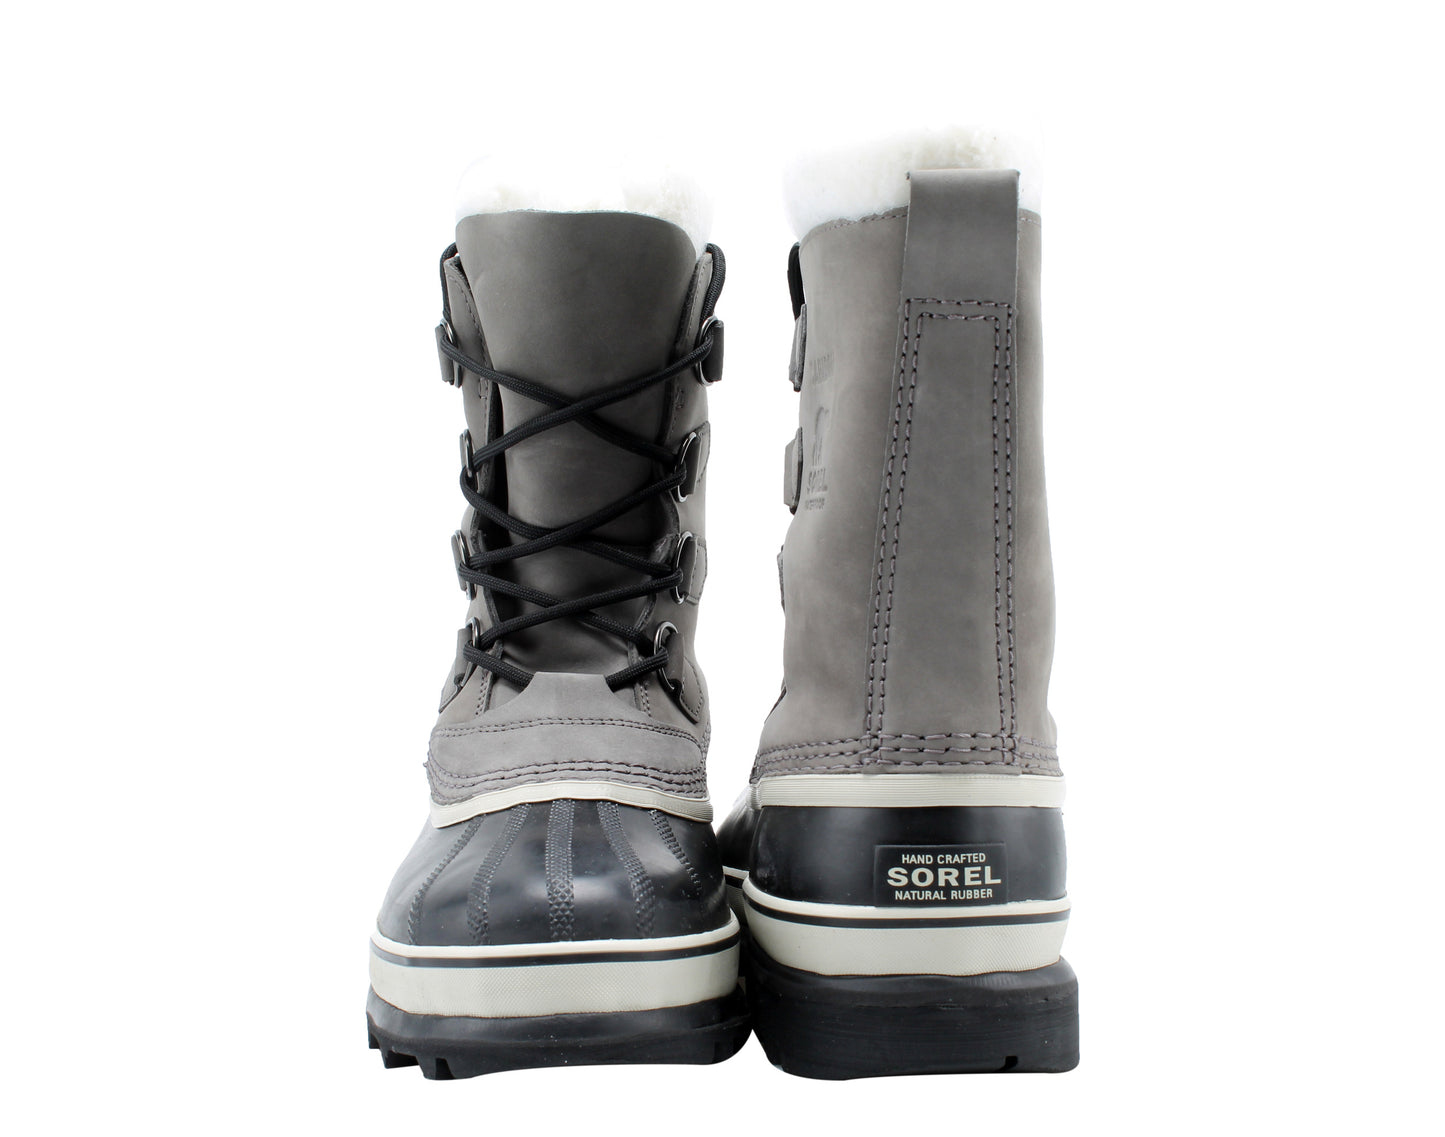 Sorel Caribou Shale/Stone Women's Waterproof Winter Snow Boots 1003812-051